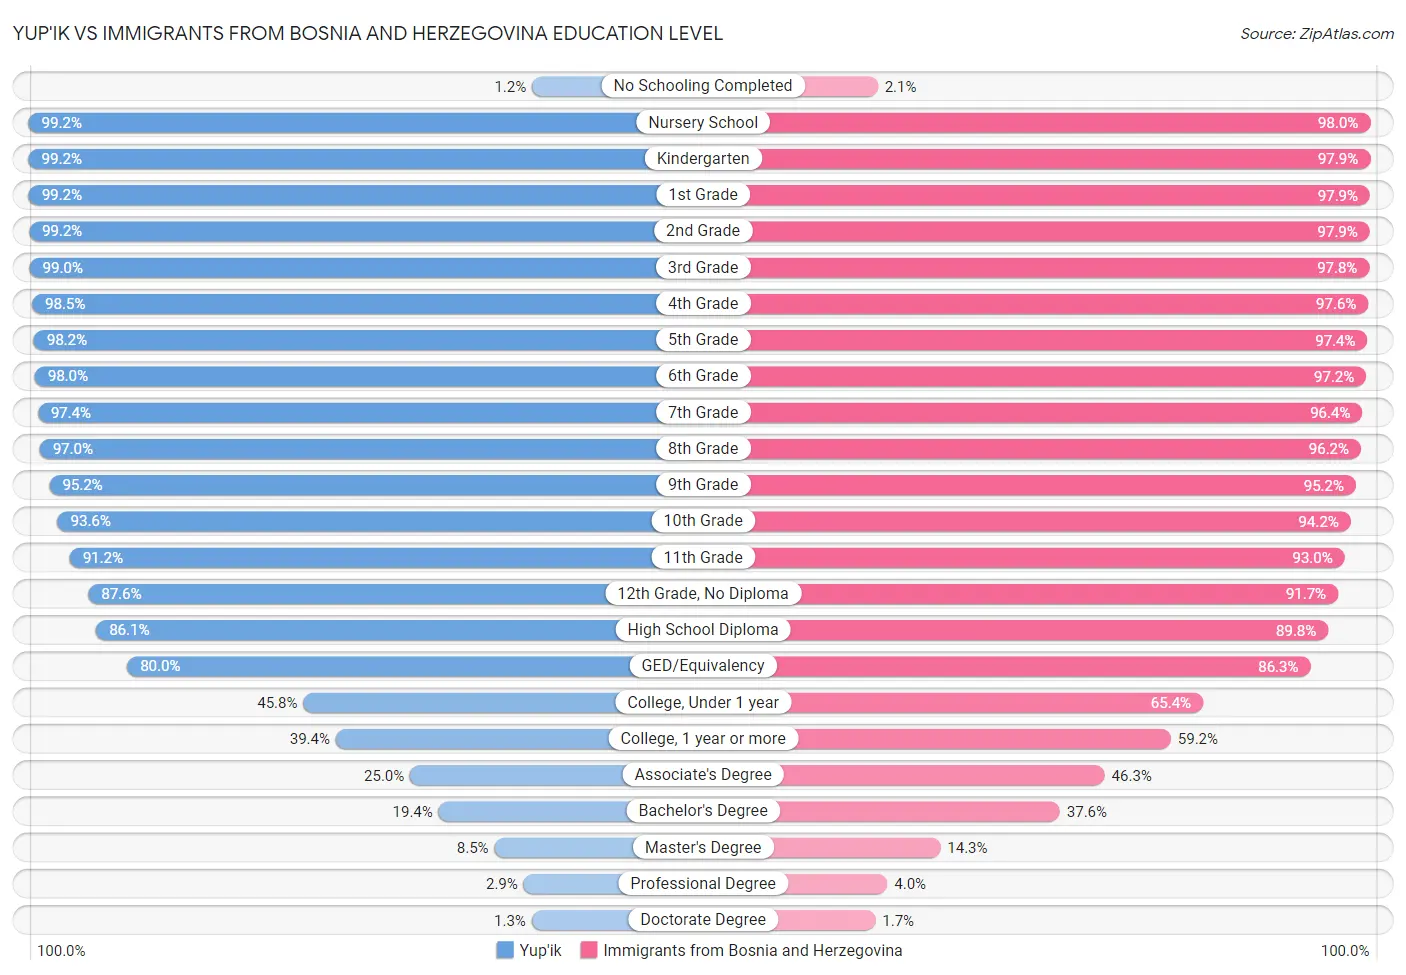 Yup'ik vs Immigrants from Bosnia and Herzegovina Education Level